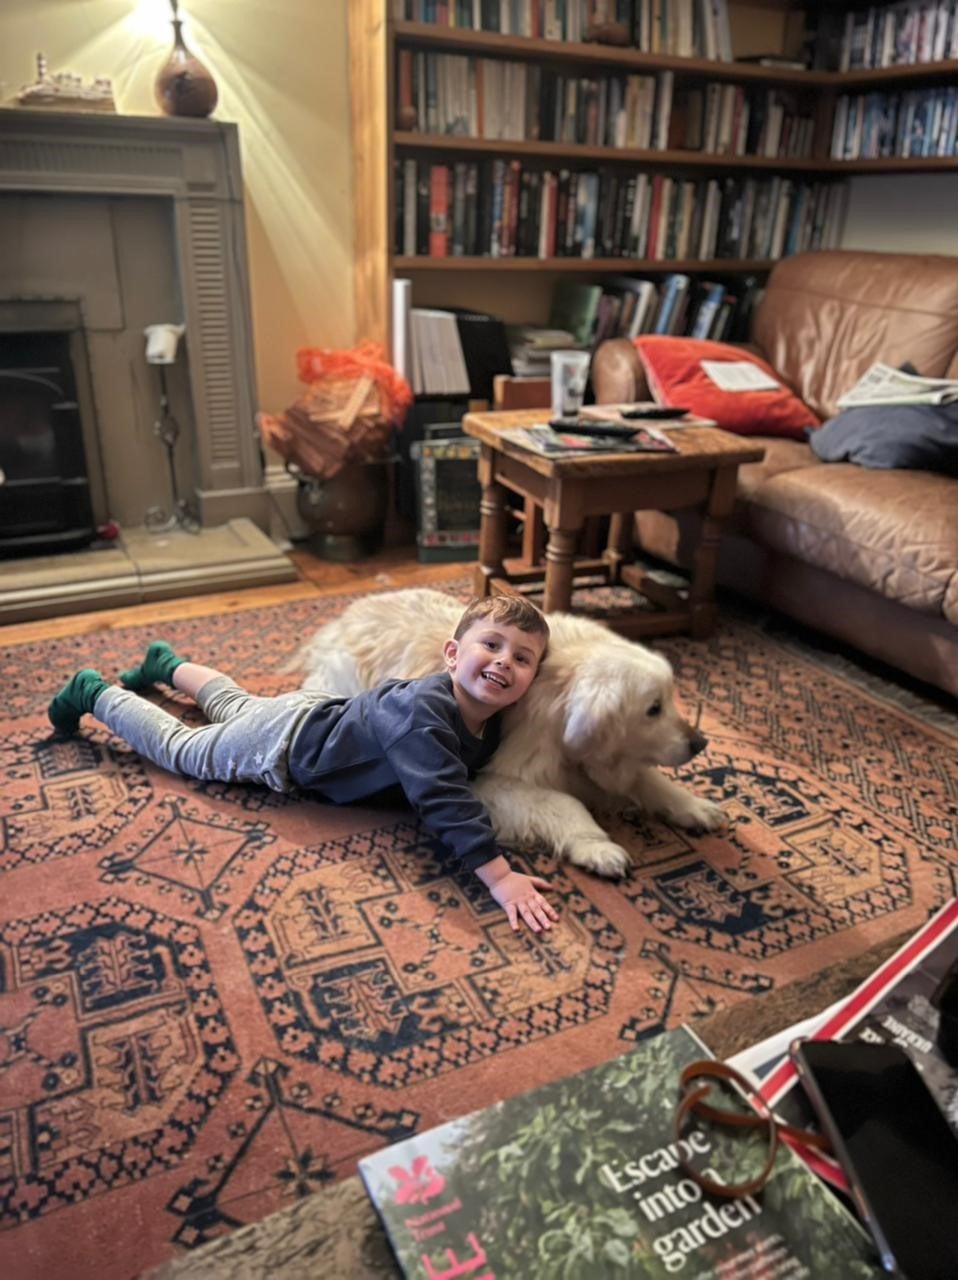 Mr Dury said three-year-old Egor ‘adores’ the family dog, Maya (Steve Dury/PA)